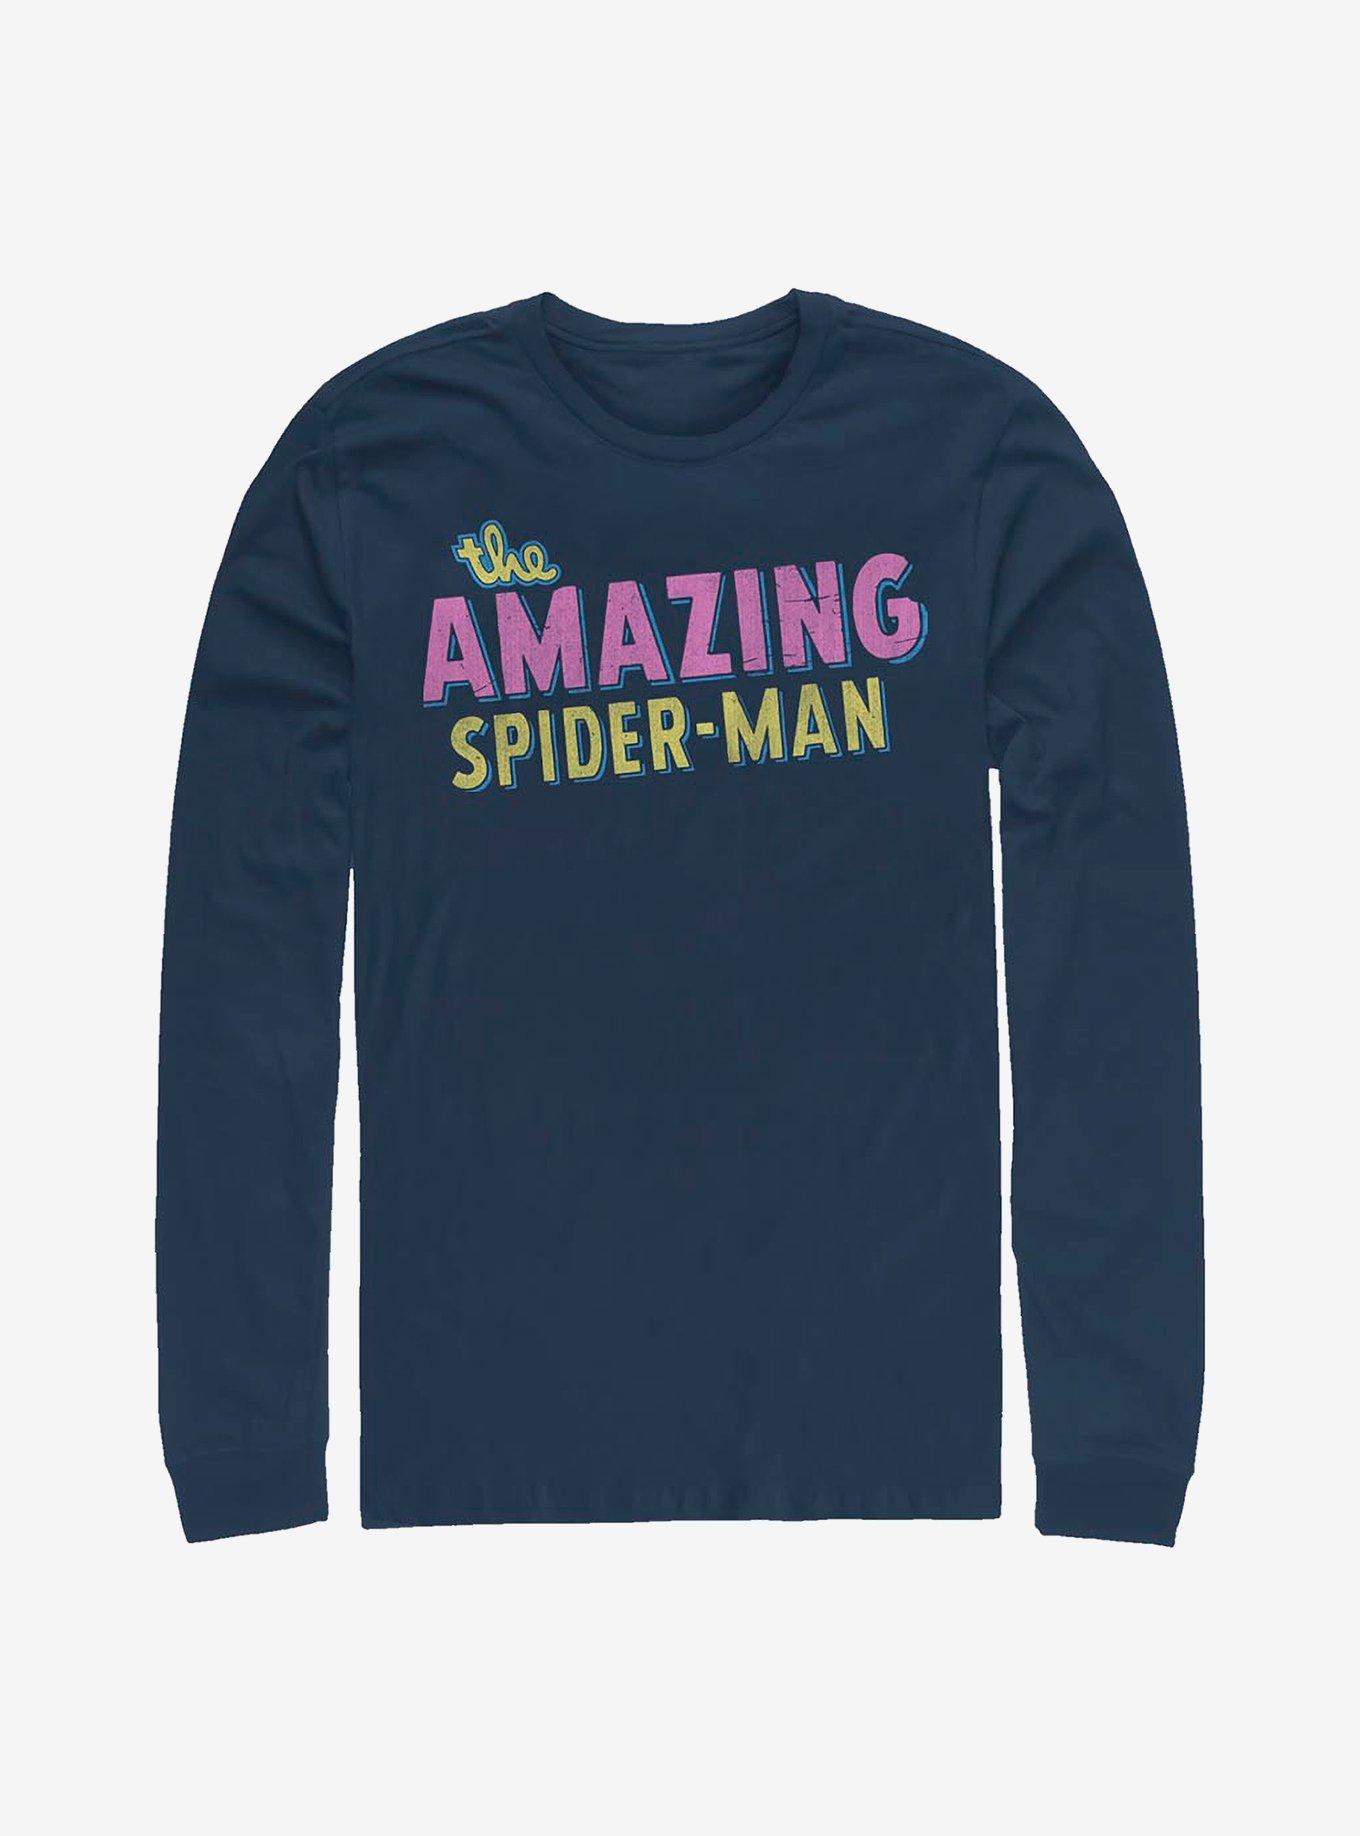 Marvel Spider-Man Amazing Retro Logo Long-Sleeve T-Shirt, NAVY, hi-res